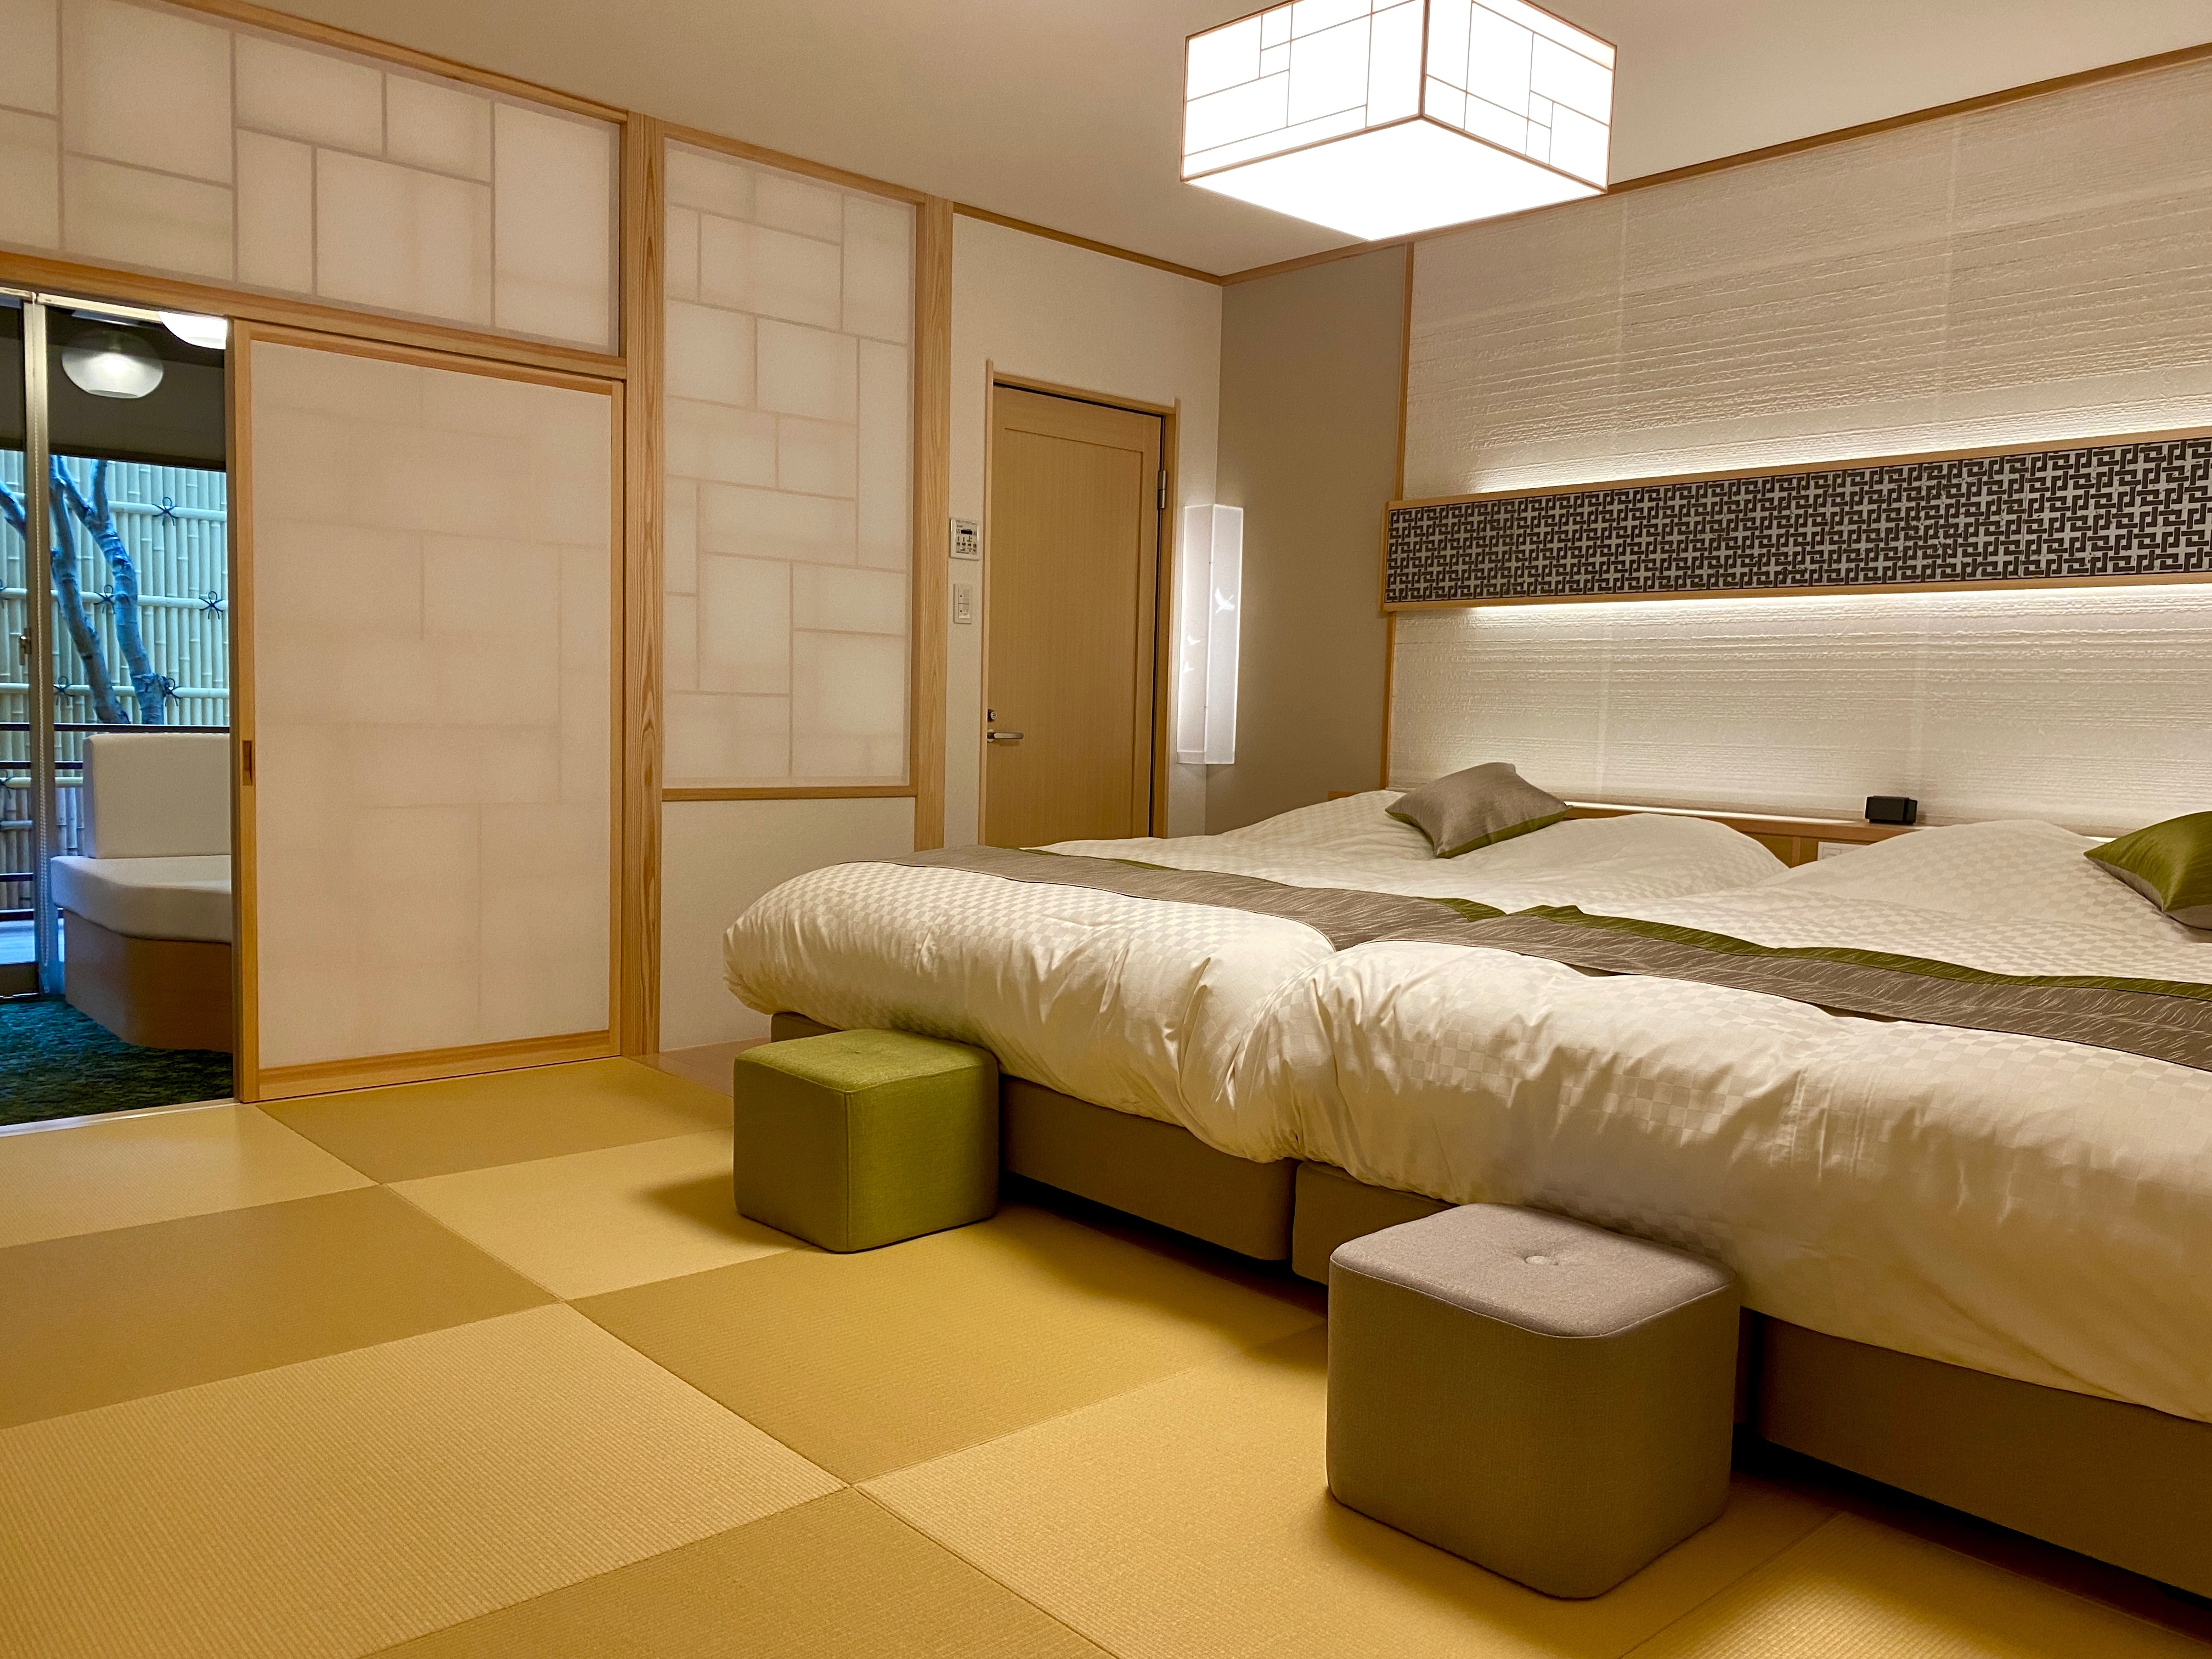 Kamar tidur modern Jepang dengan kamar mandi terbuka dan ruang makan